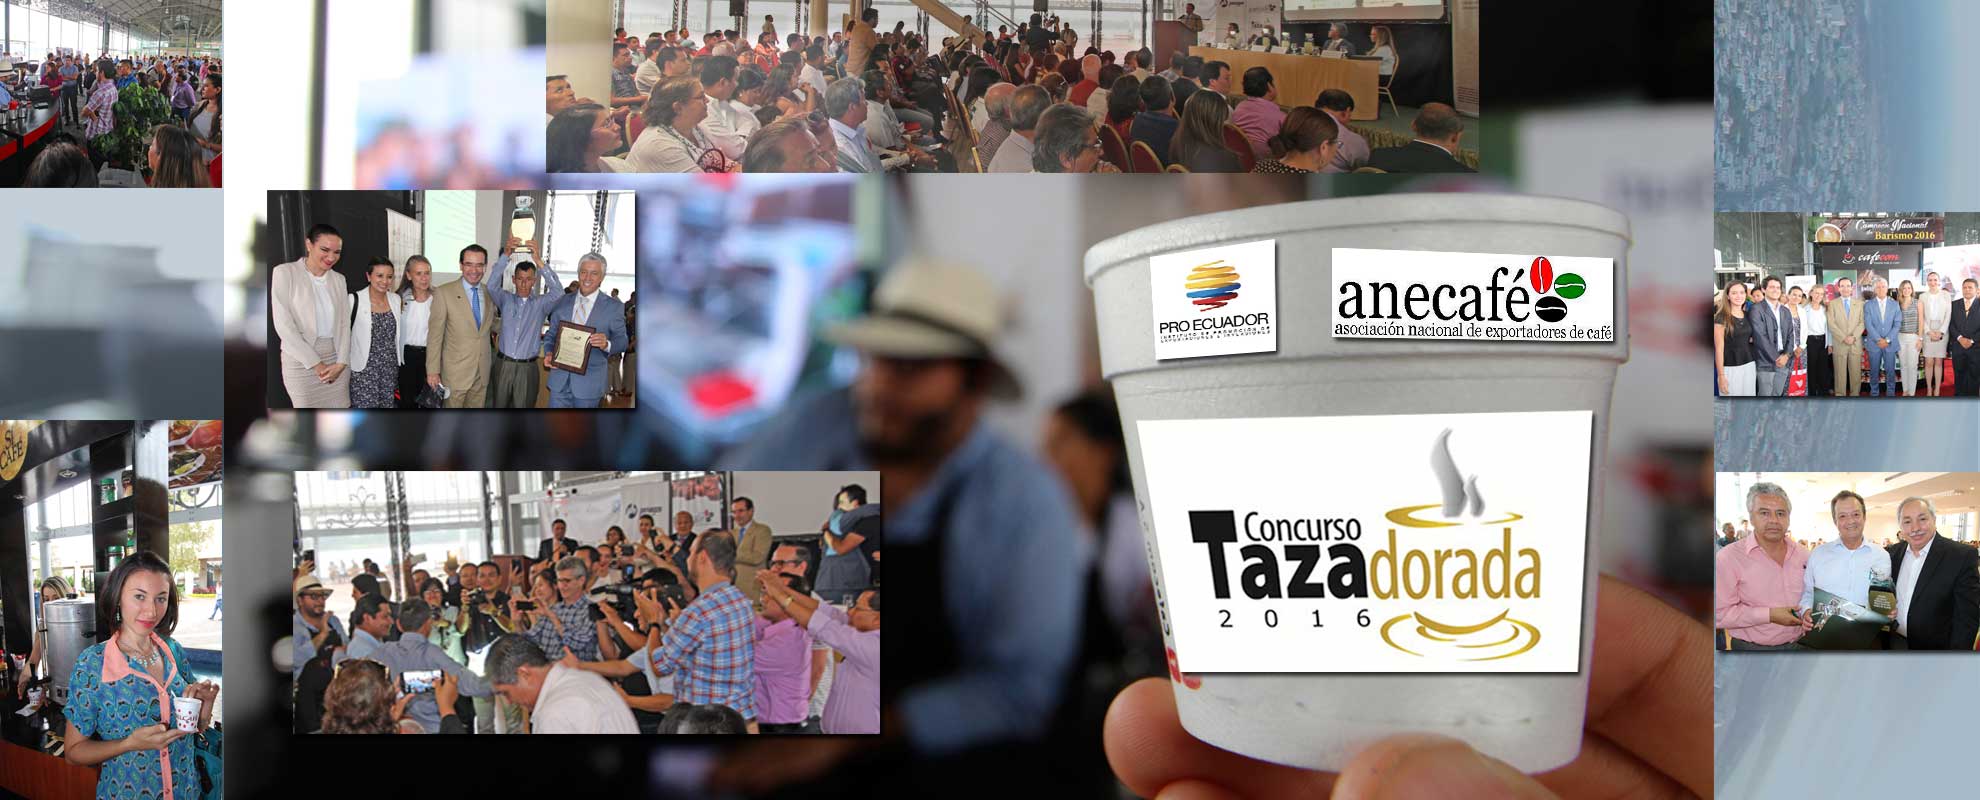 TAZA DORADA 2016 hace Historia, la excelencia del café ecuatoriano